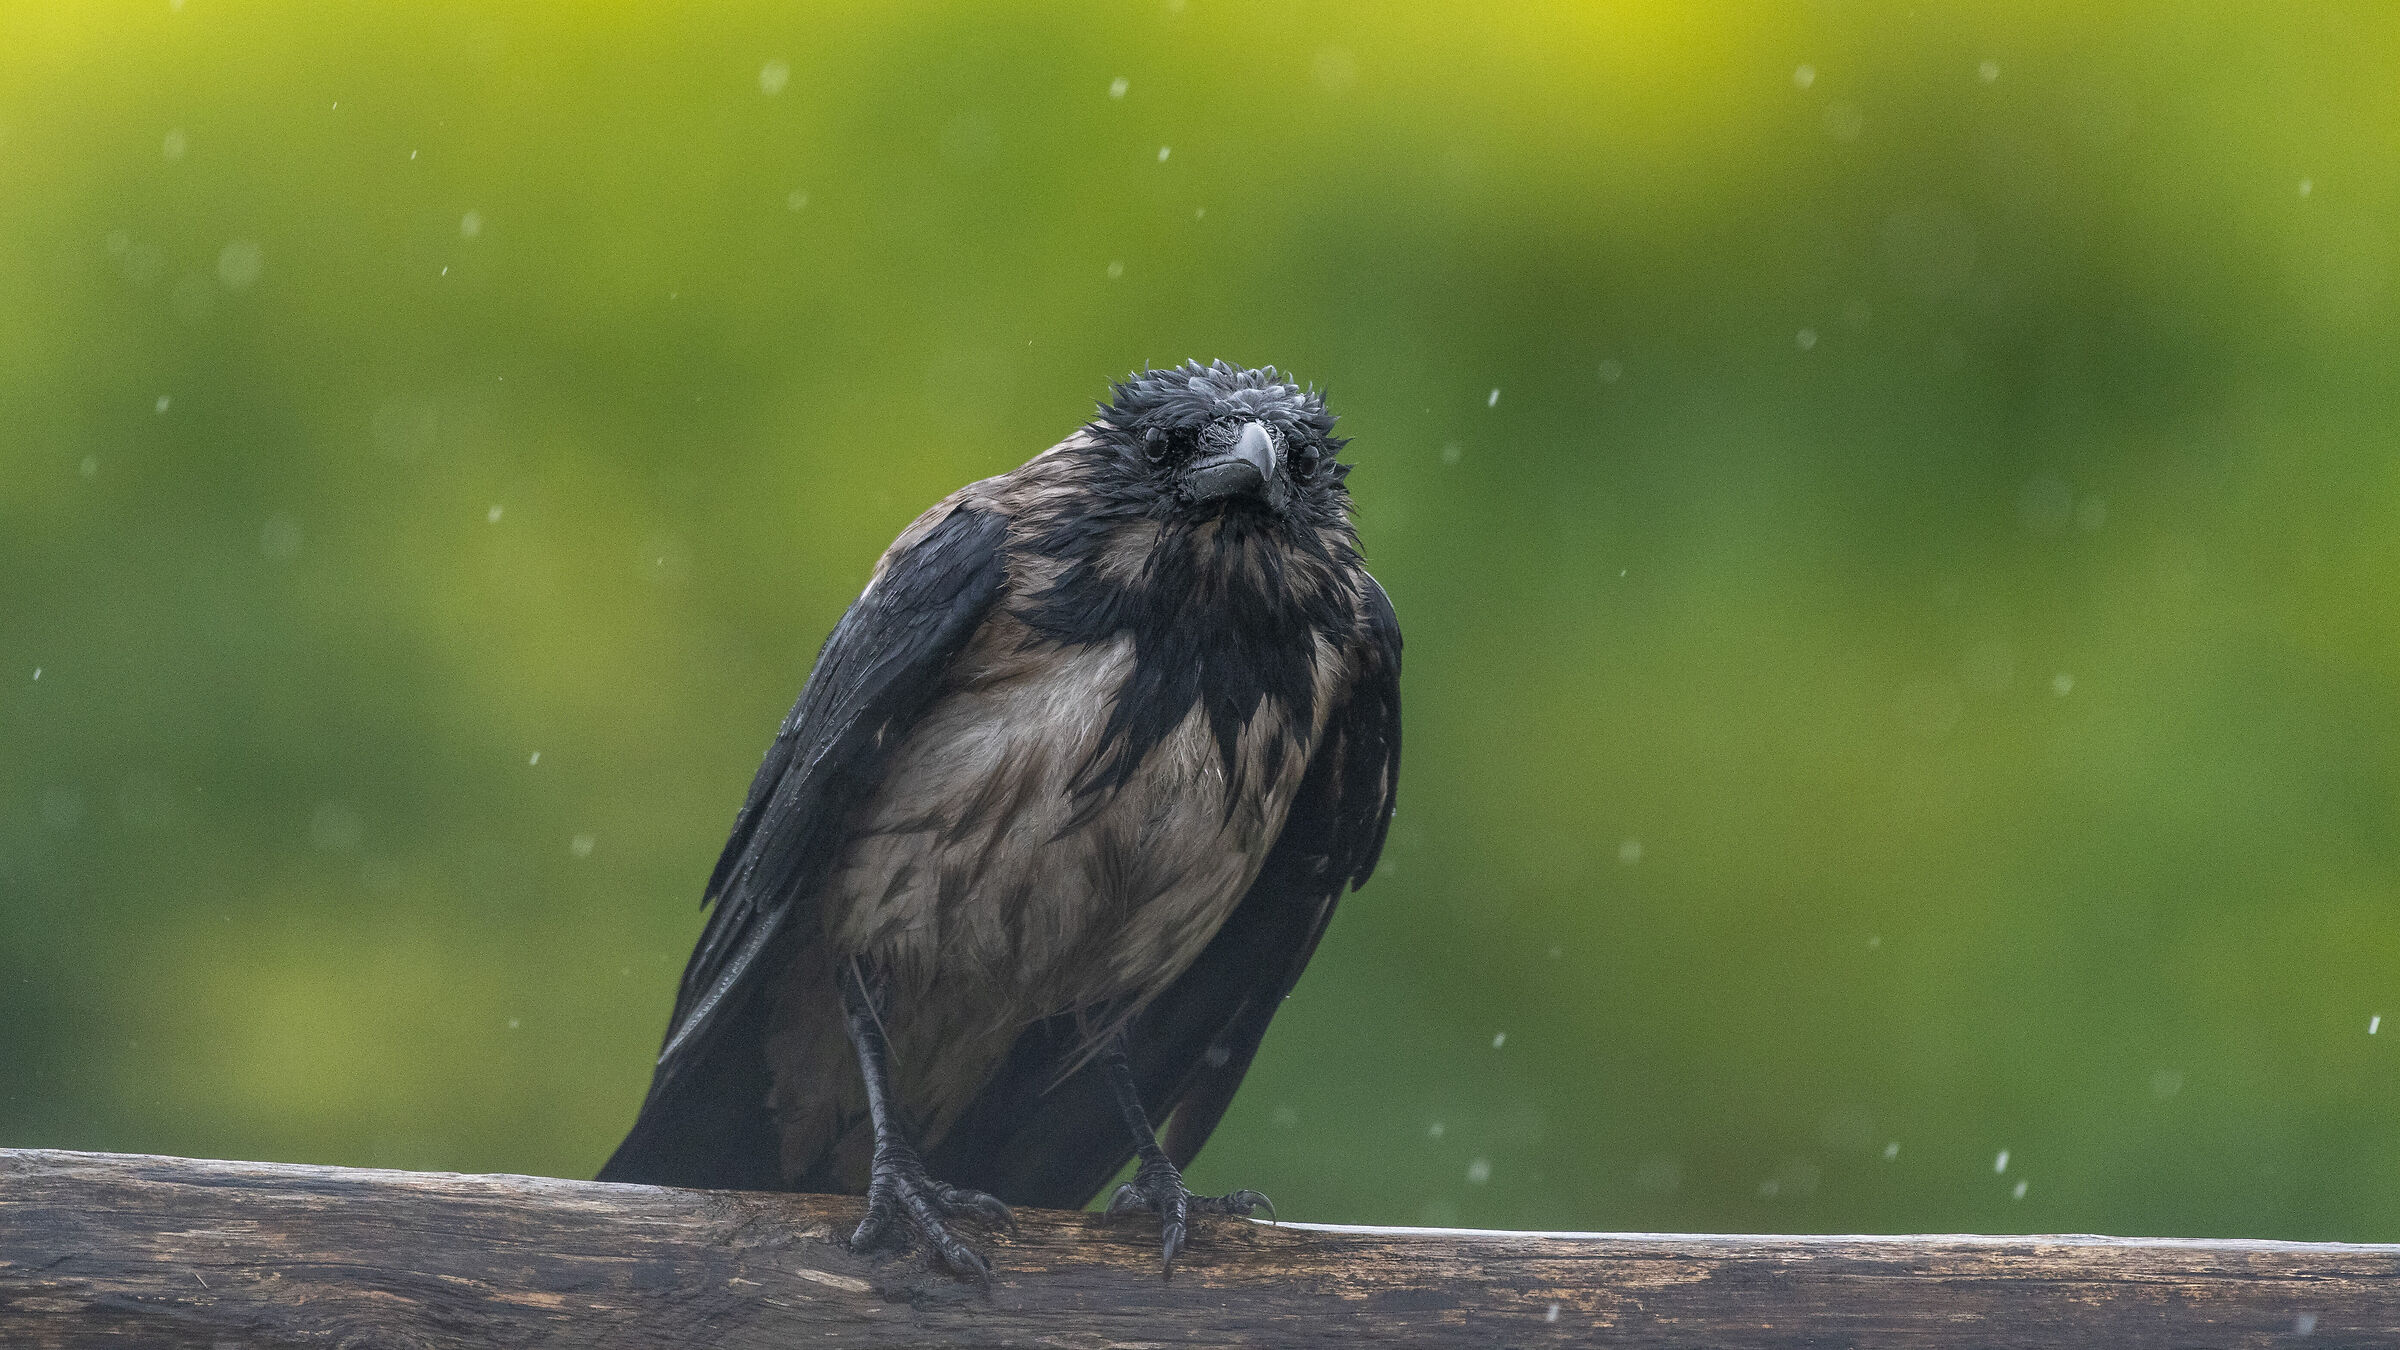 Wet crow, lucky crow...